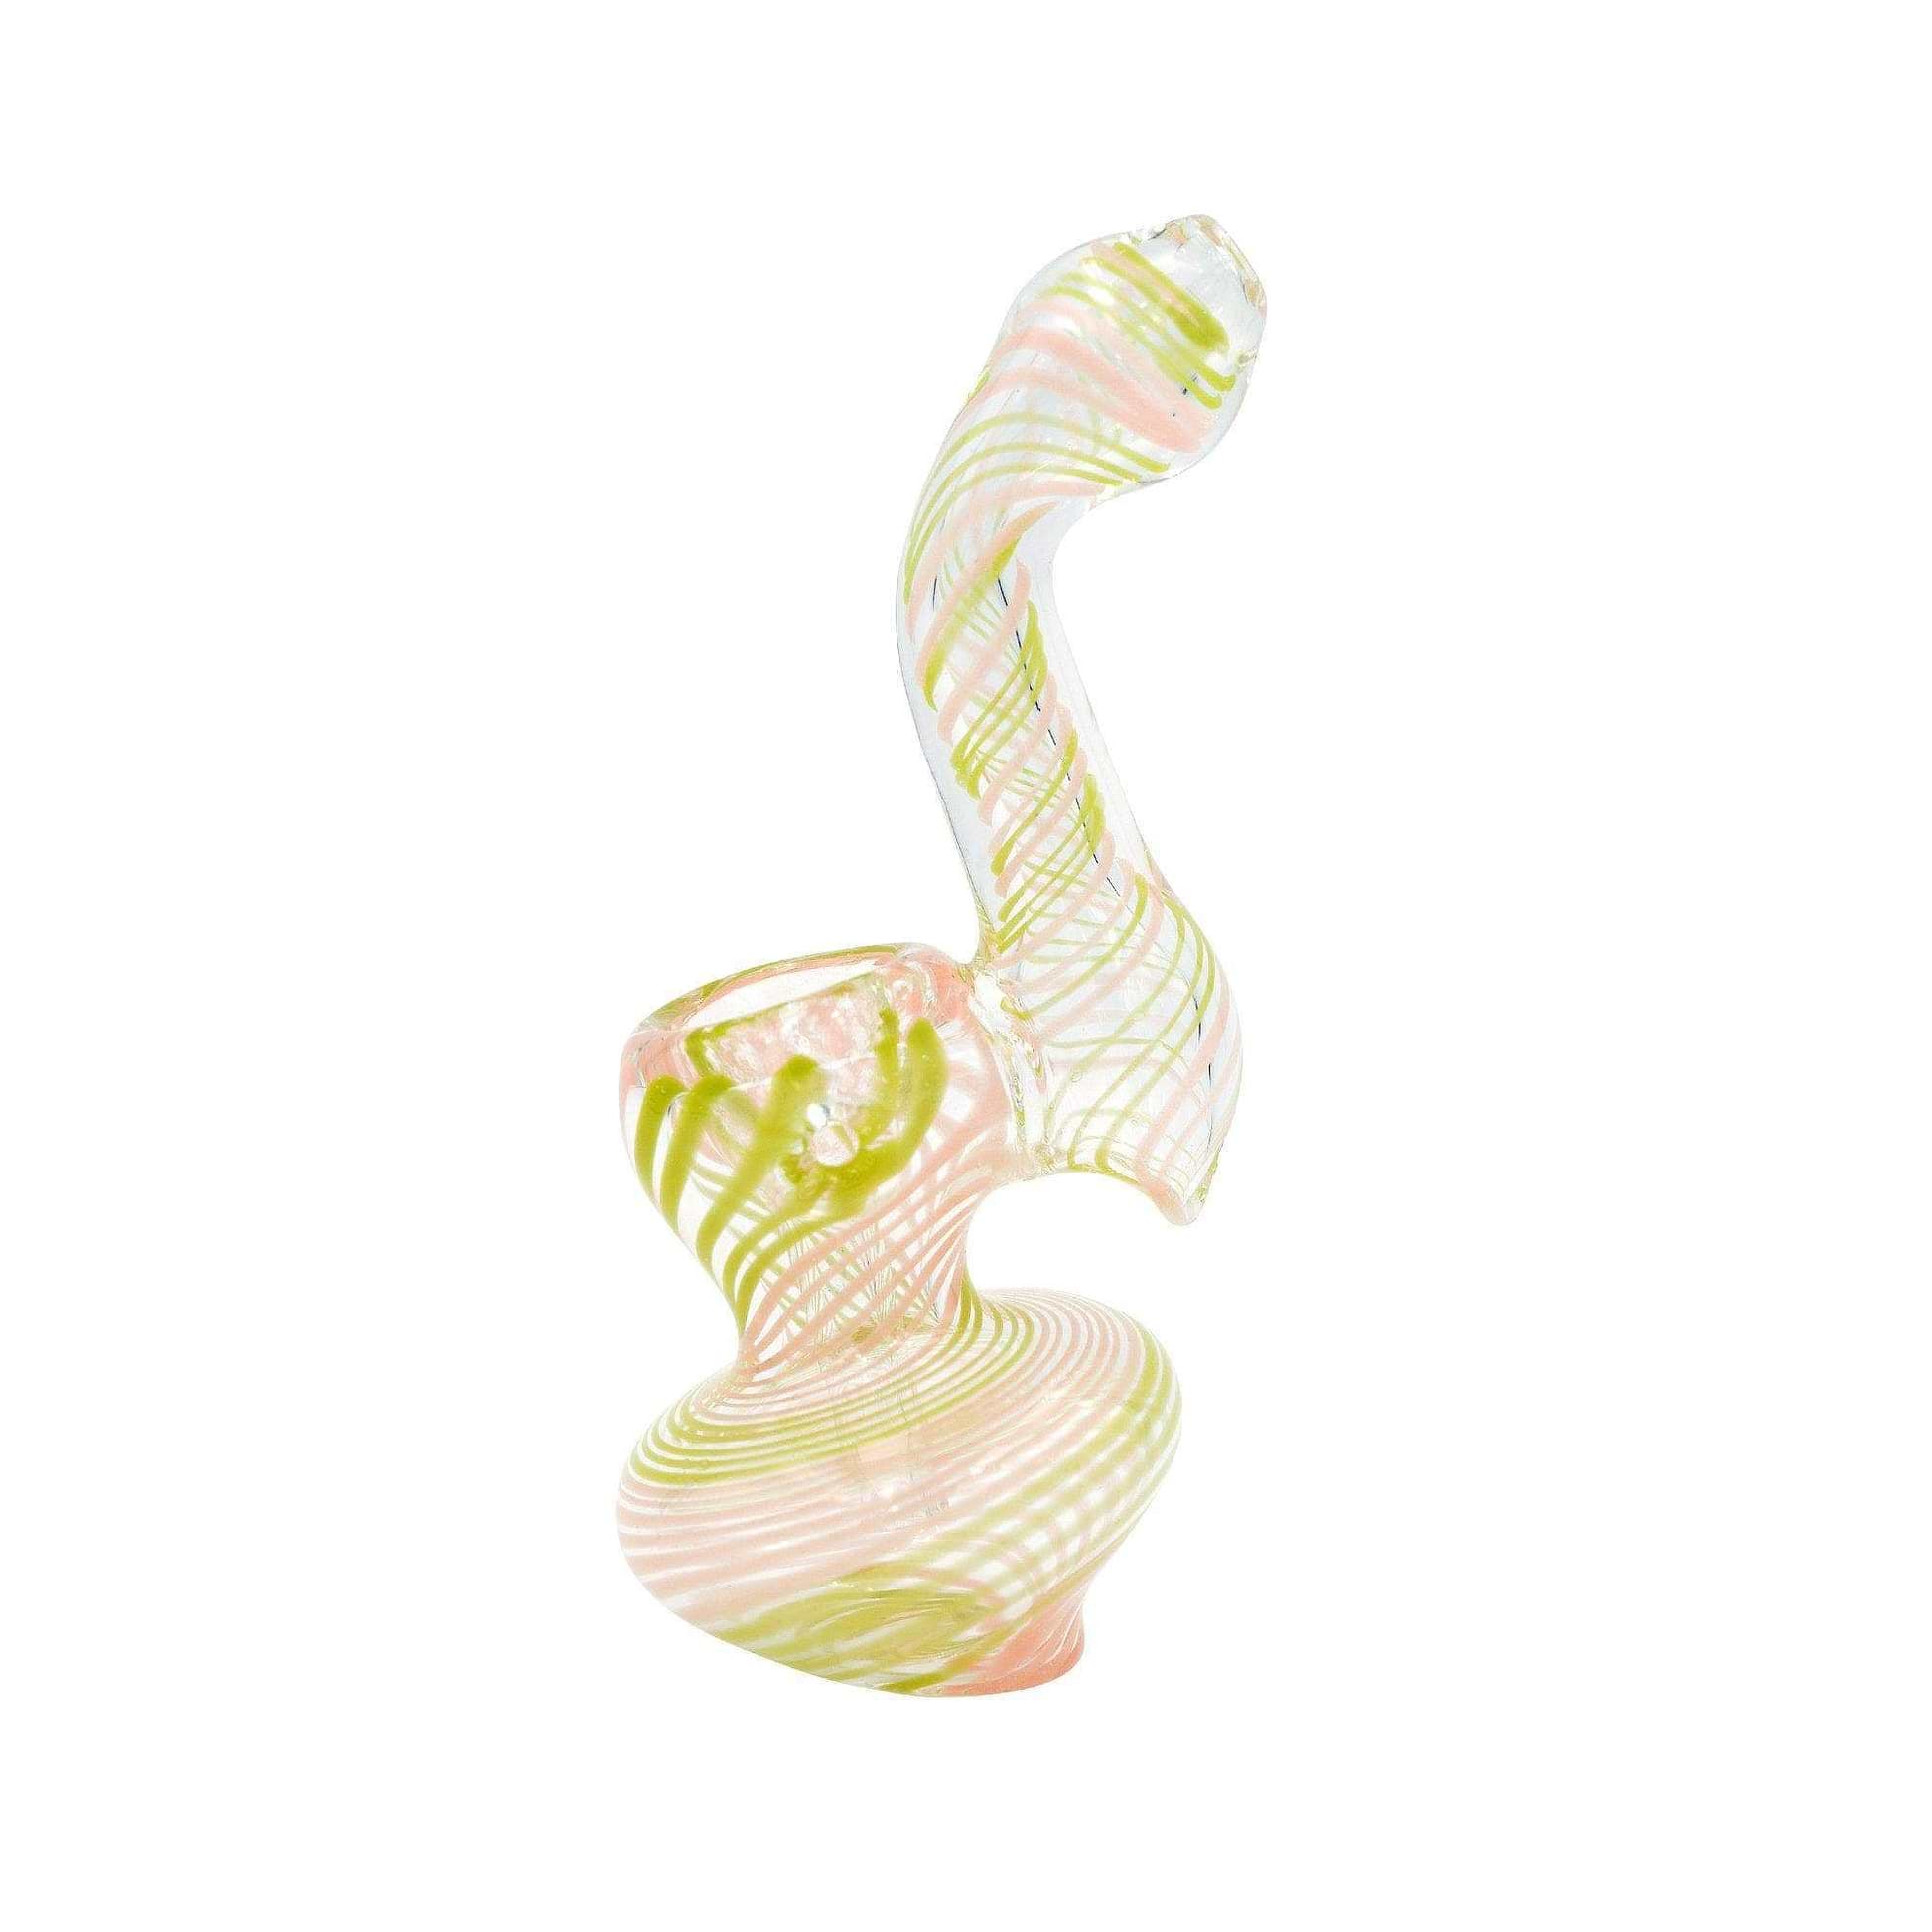 4-inch heat-safe mini glass classic bubbler bent neck Strawberry Kiwi swirl colors twisting design genie-in-a-bottle shape